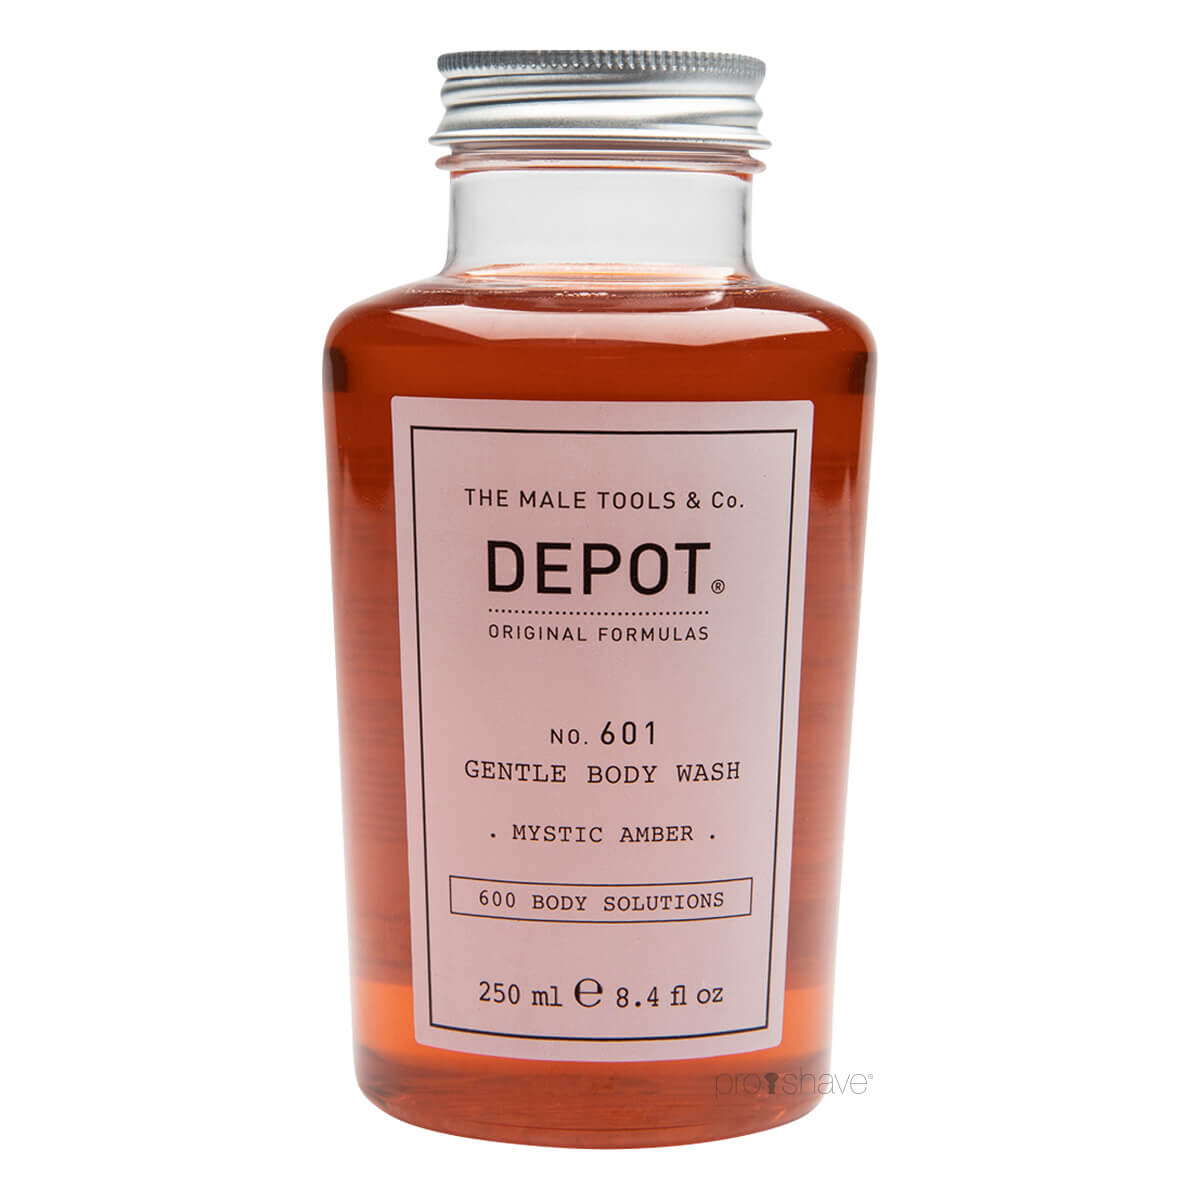 14: Depot Gentle Body Wash, Mystic Amber, No. 601, 250 ml.